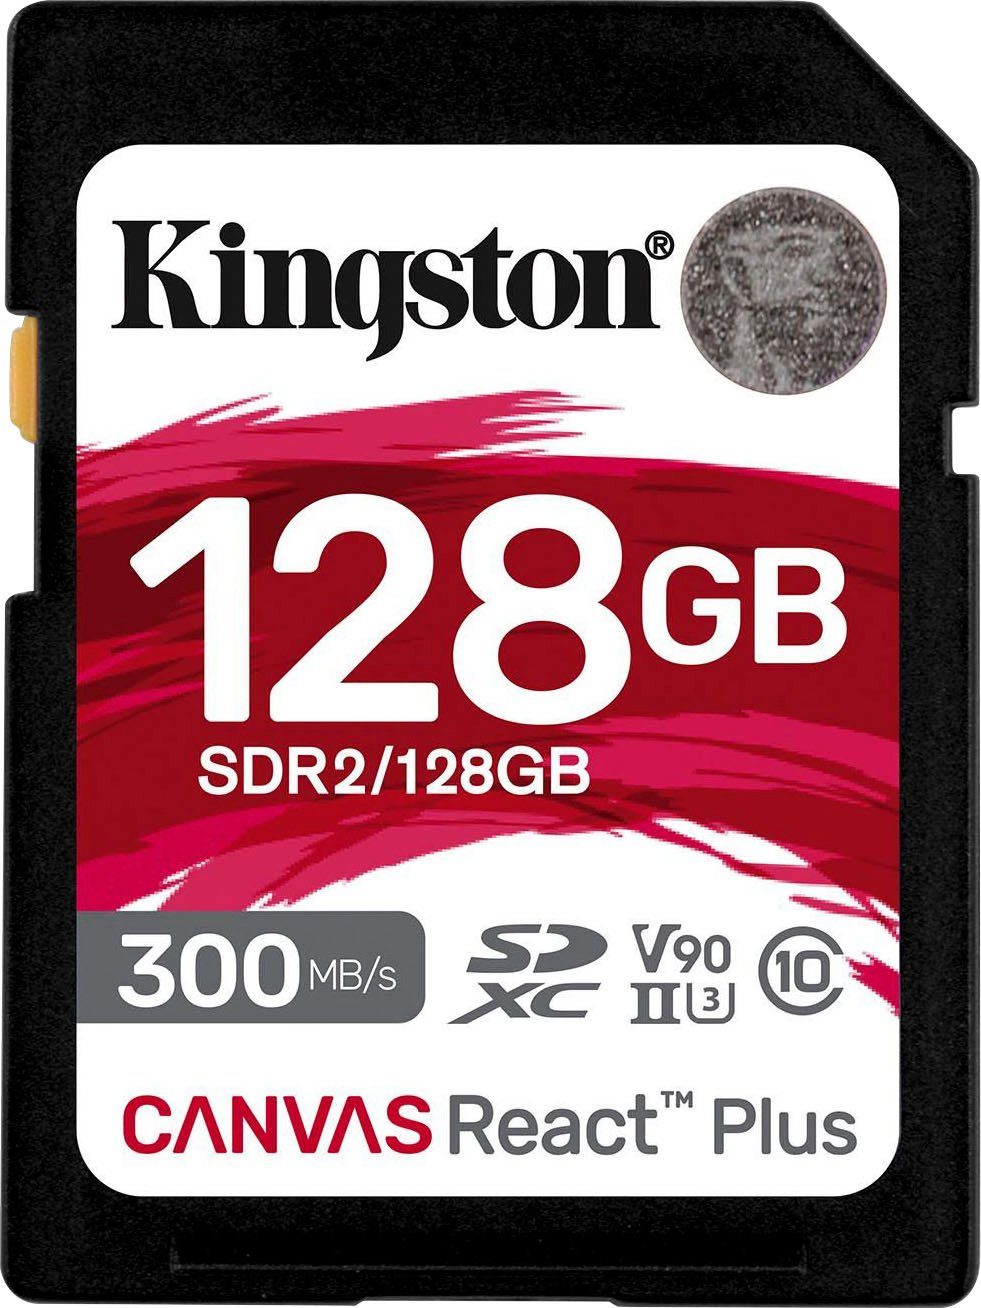 Kingston Canvas React Plus SD 128GB Speicherkarte (128 GB, Class 10, 300 MB/s Lesegeschwindigkeit)